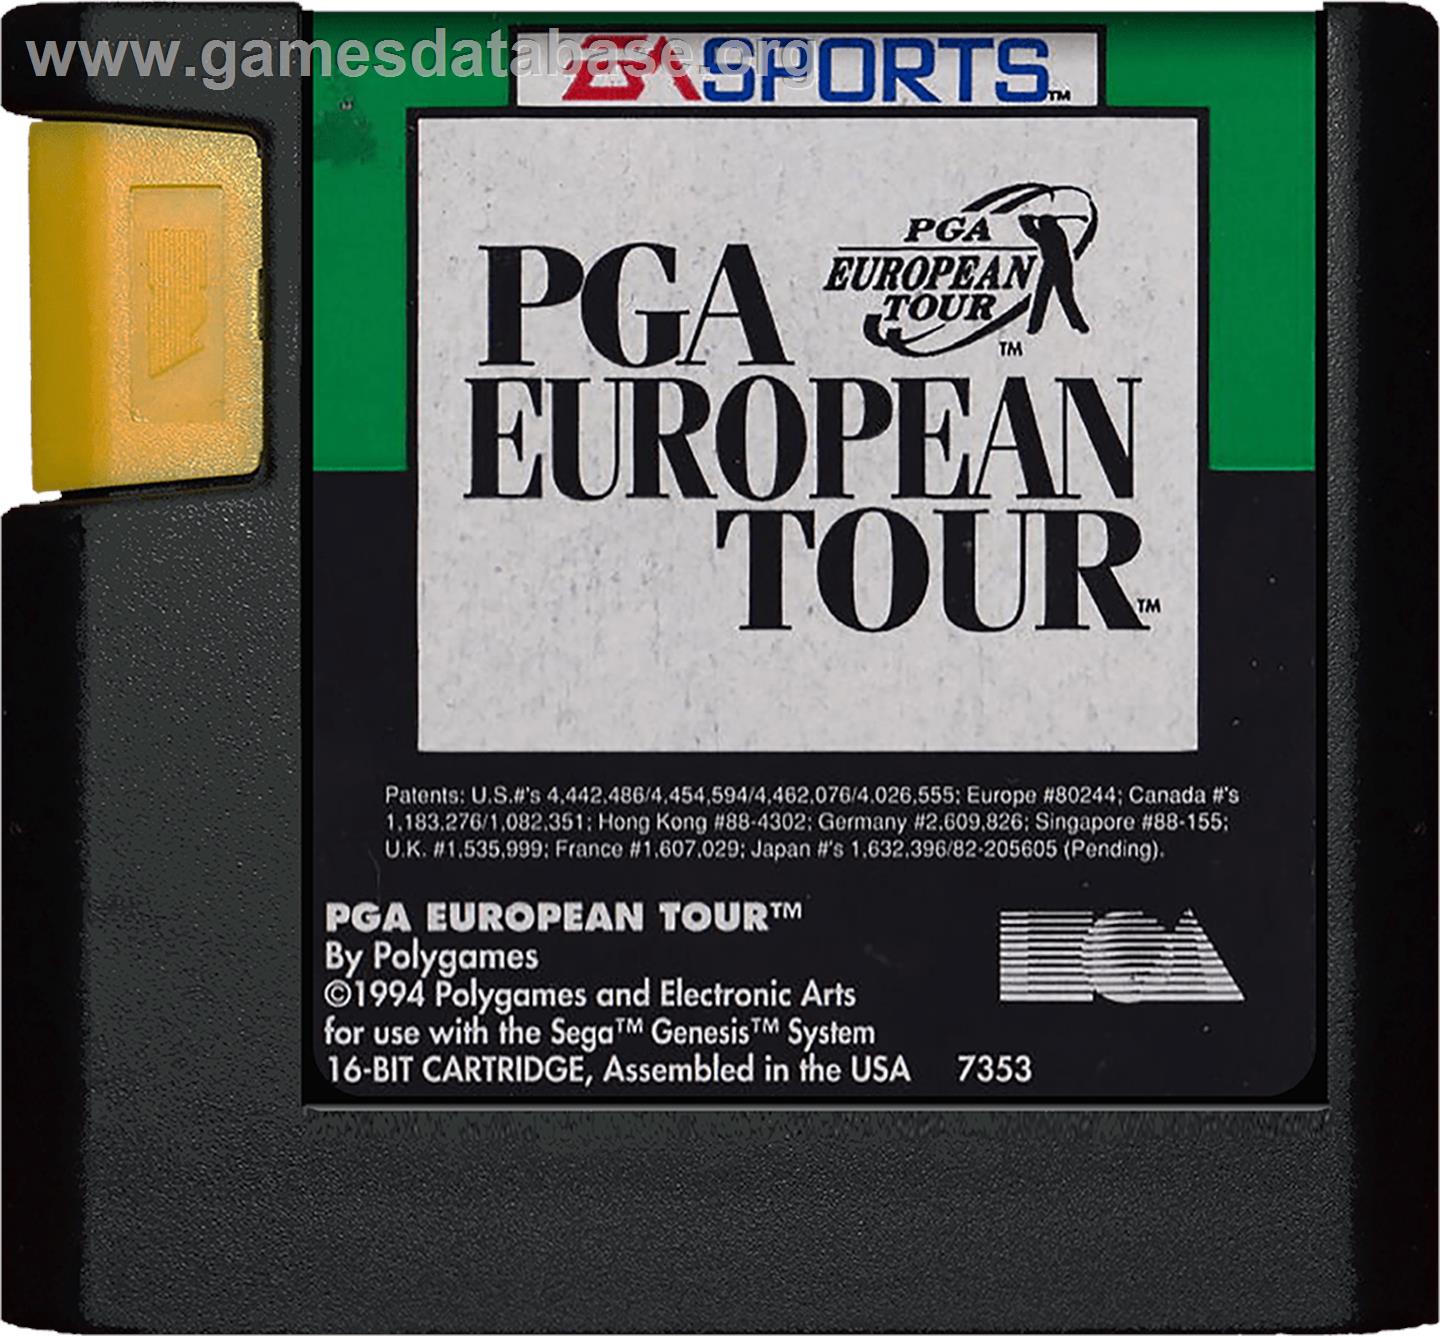 PGA European Tour - Sega Genesis - Artwork - Cartridge